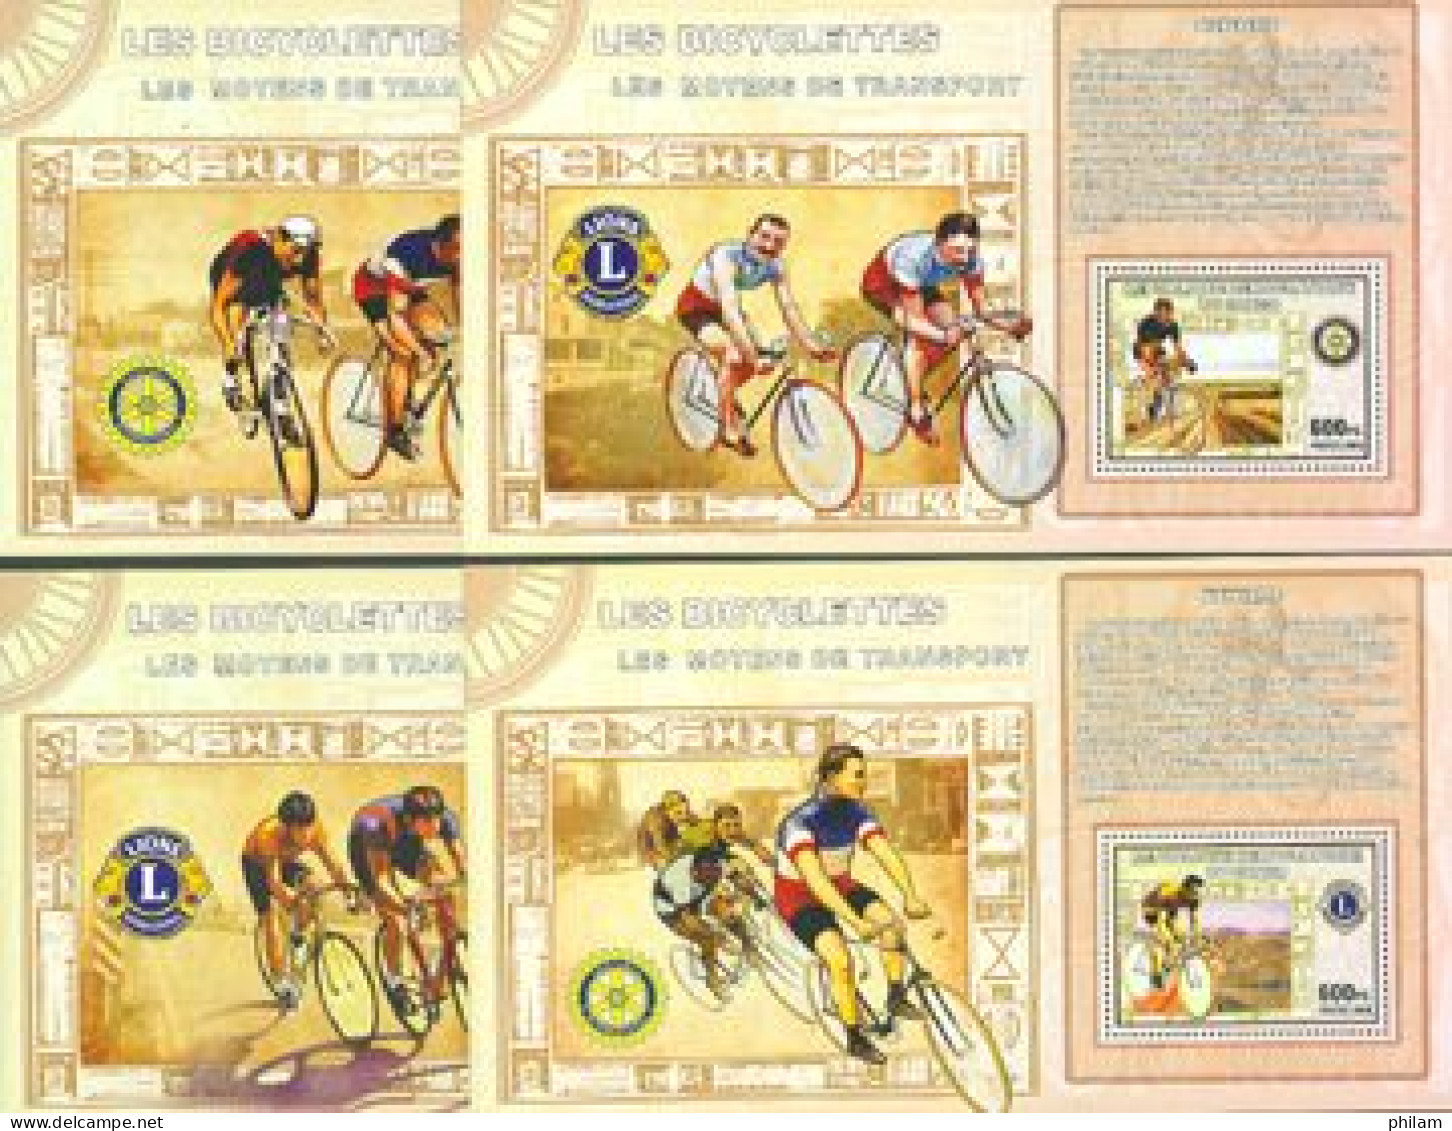 CONGO KINSHASA 2006 - Les Bicyclettes - Lions Club Et Rotary - 4 BF - Vélo